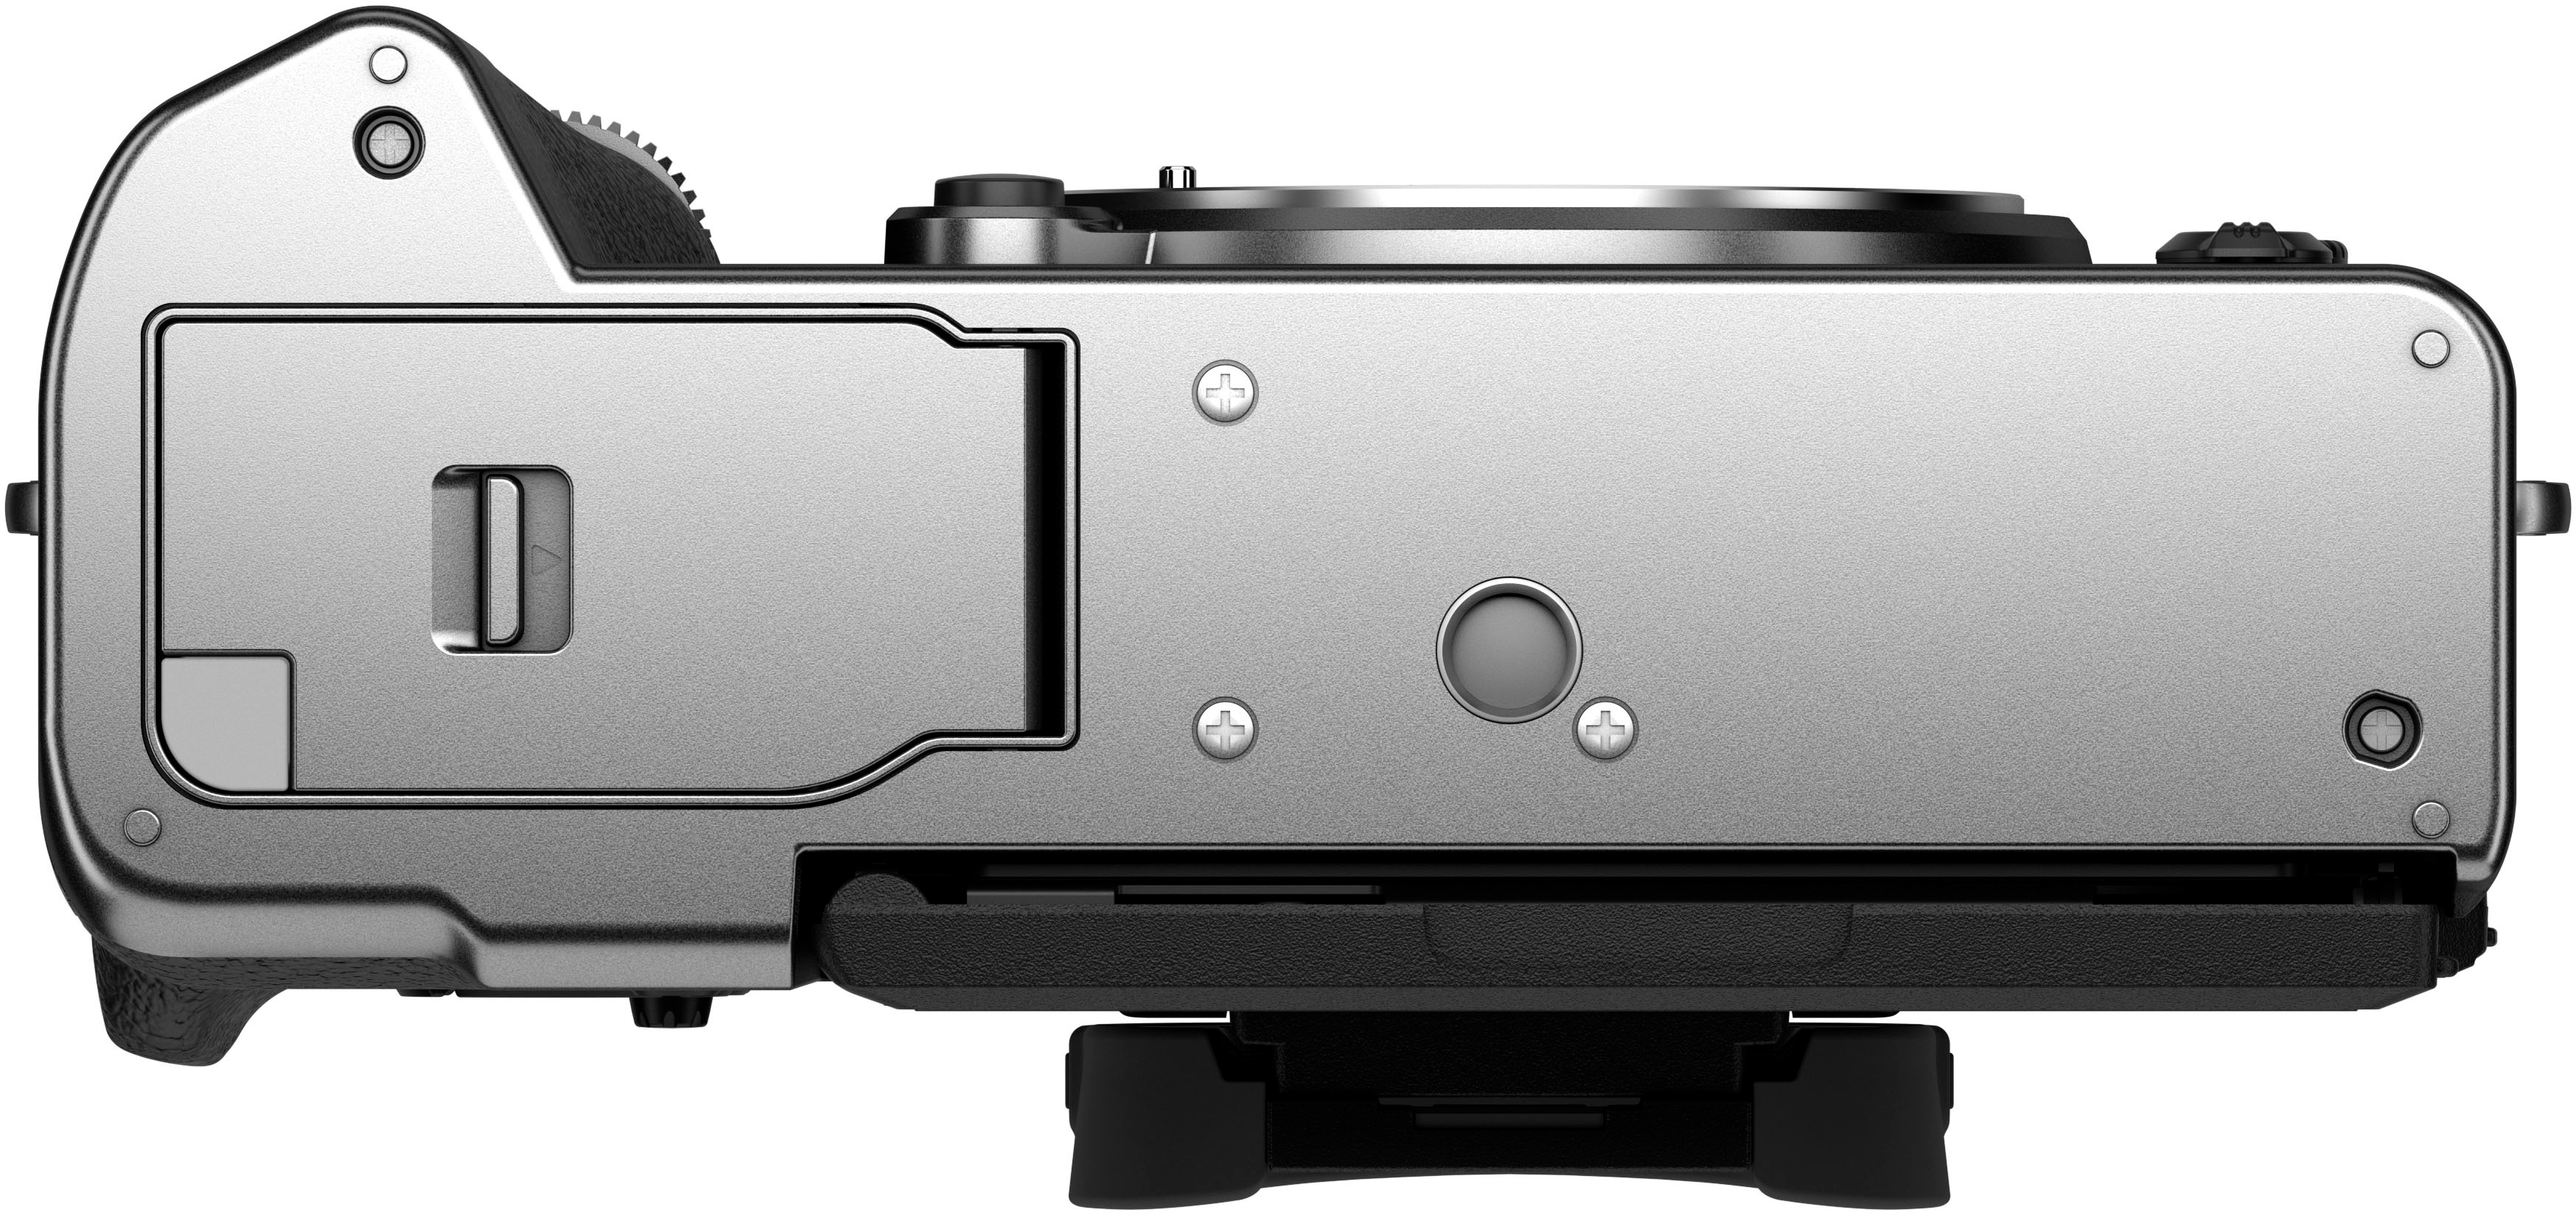 Best Buy: Fujifilm X Series X-T4 Mirrorless Camera (Body Only) Black  16652855